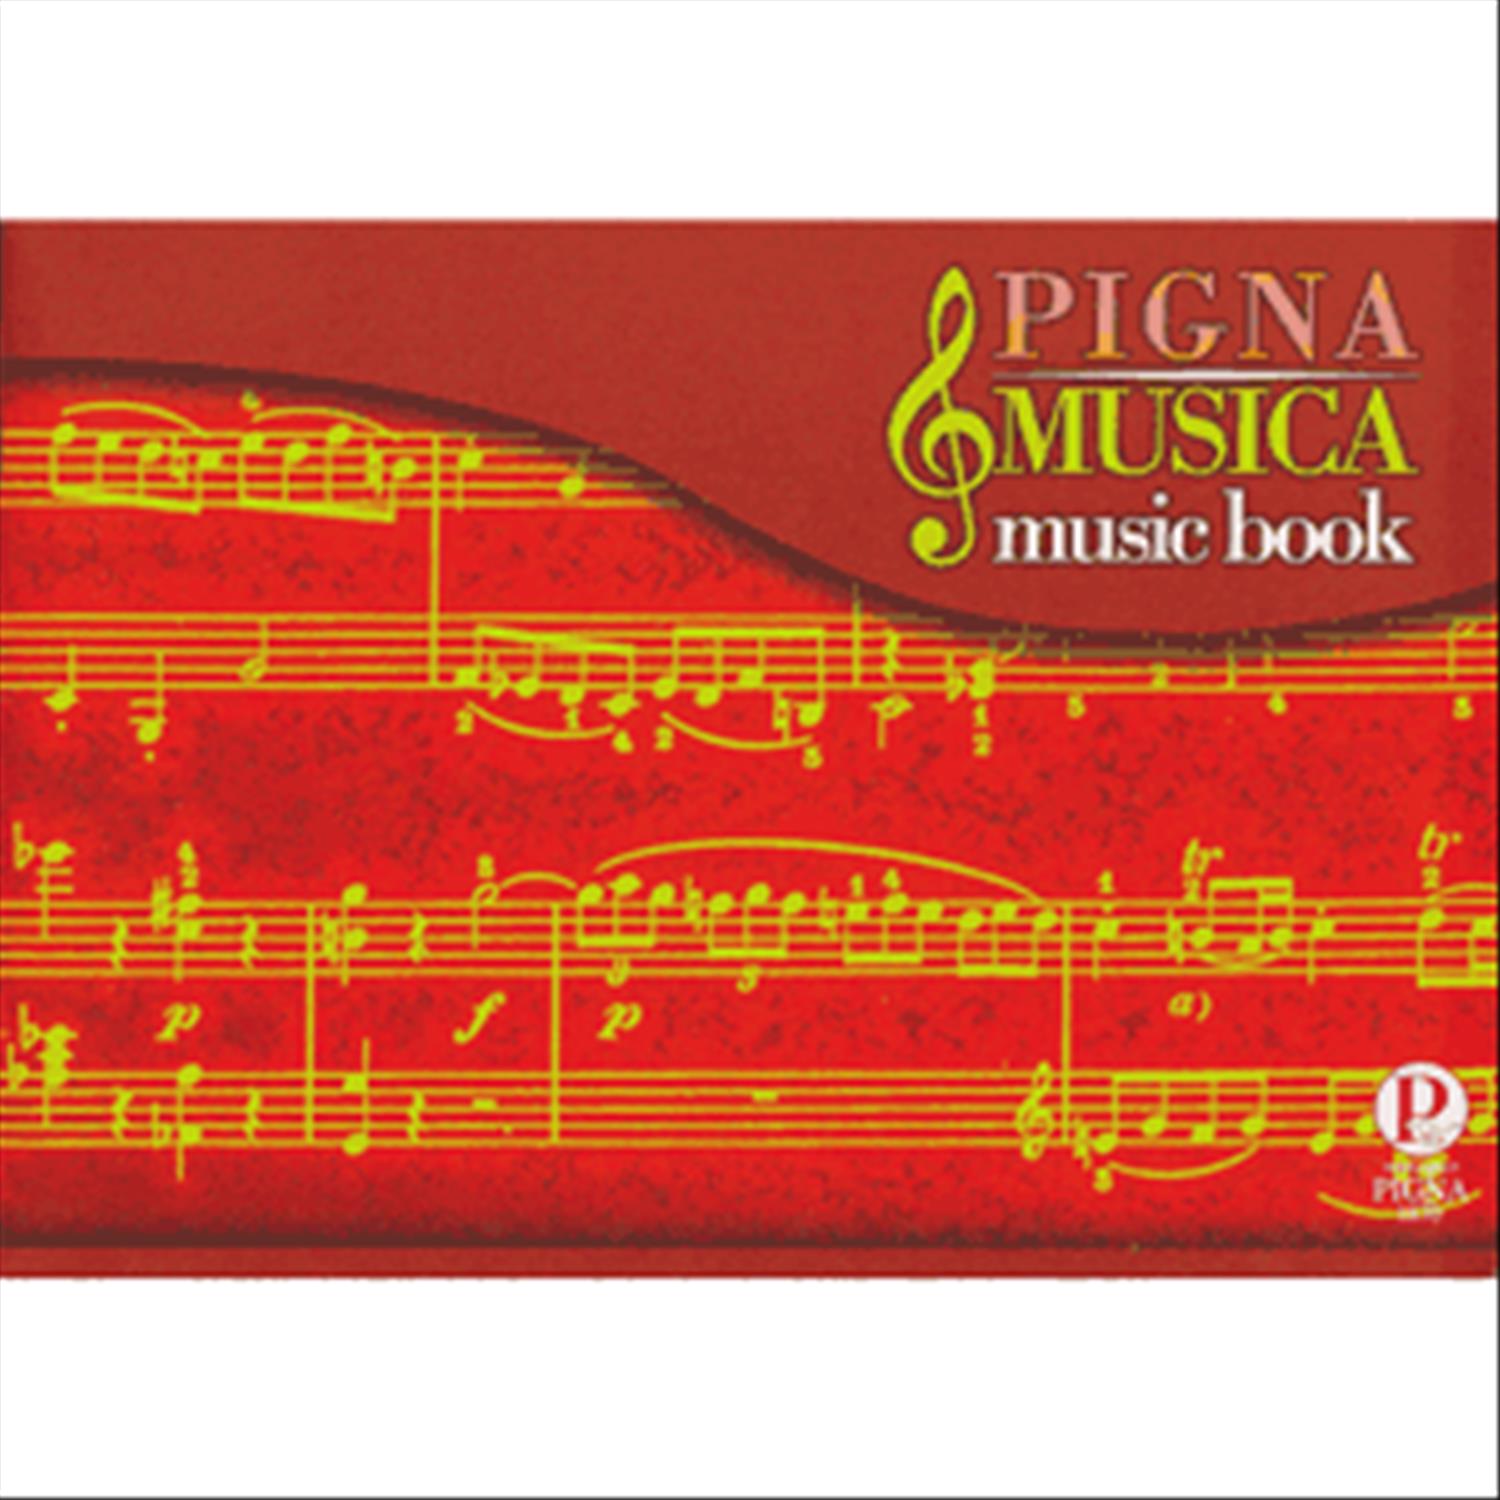 Quaderno Pentagrammato: Quaderno Di Musica (Paperback)